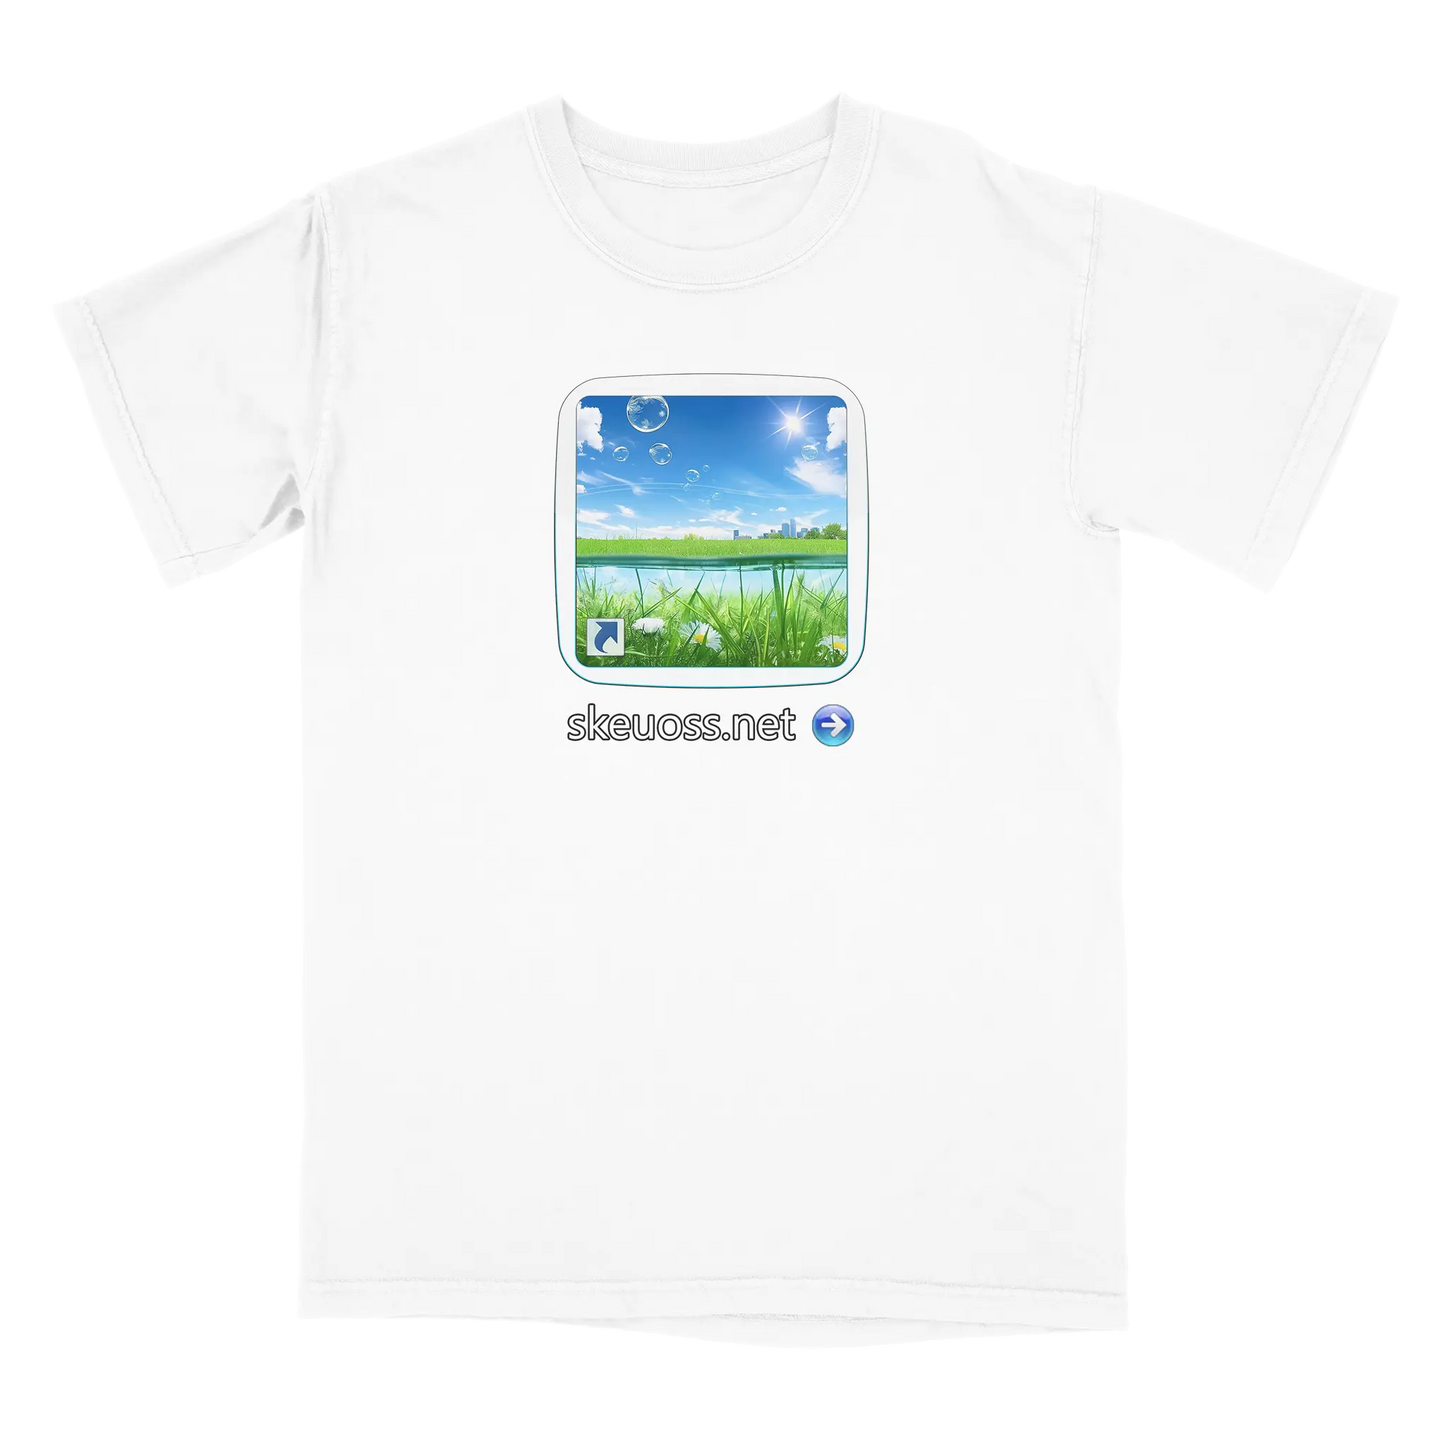 Frutiger Aero T-shirt - User Login Collection - User 203